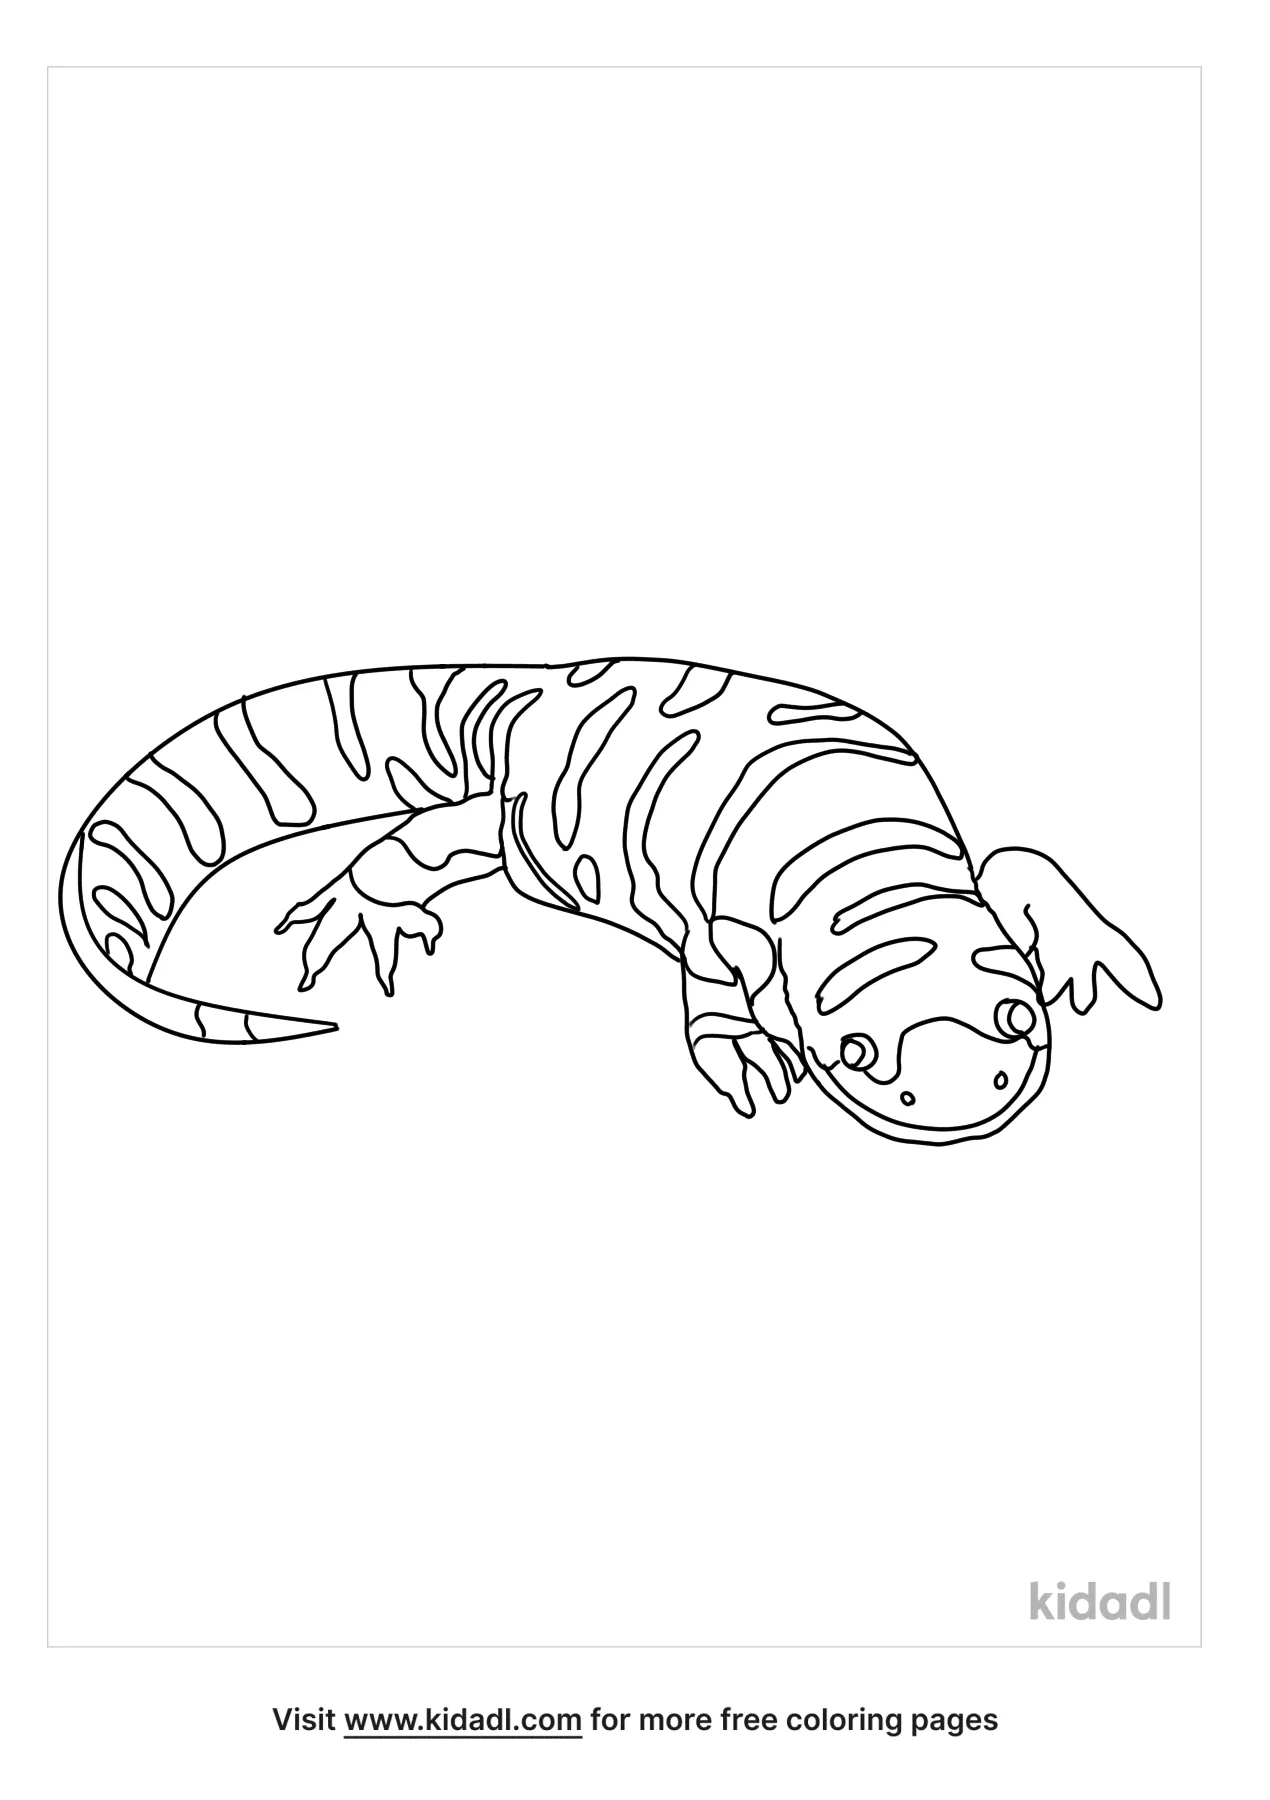 Tiger Salamander Coloring Page